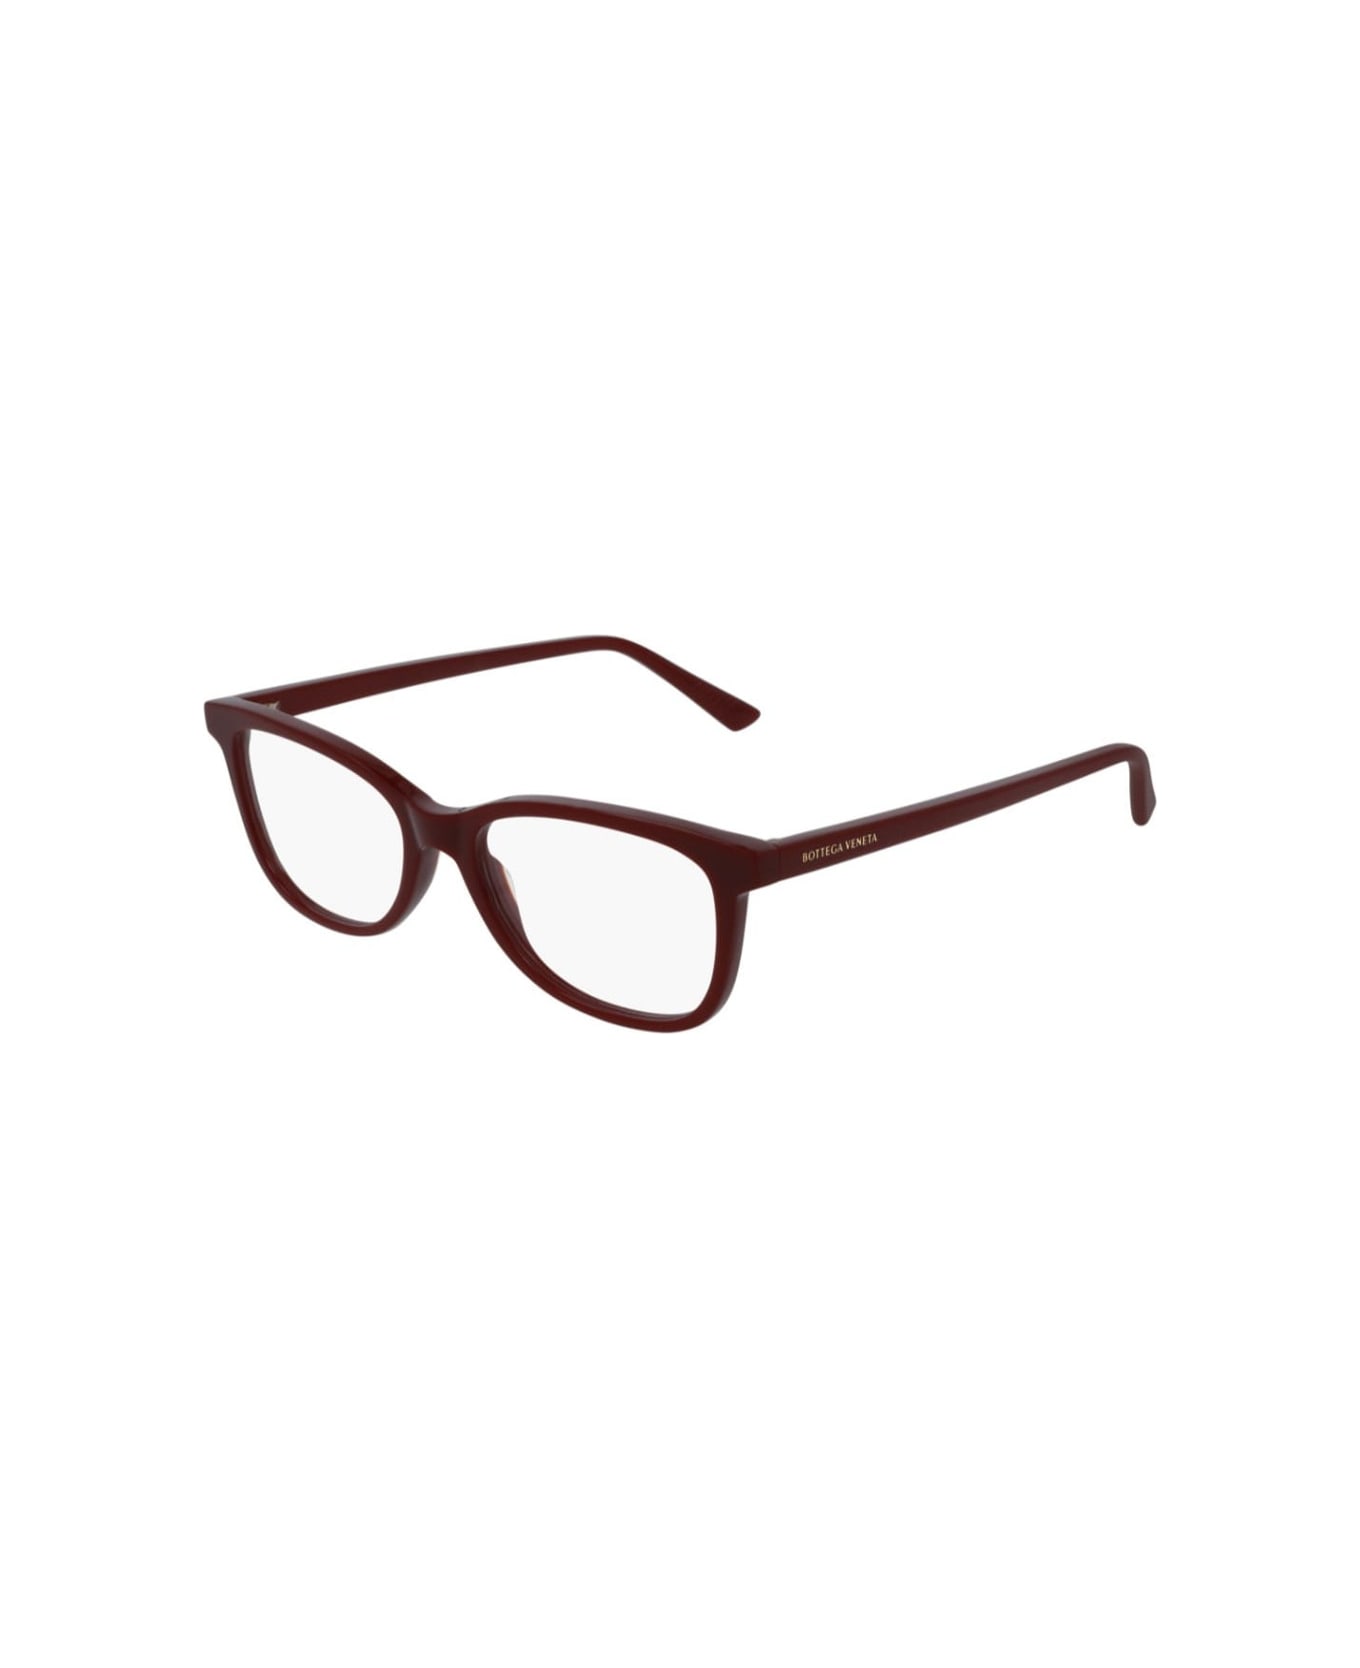 Bottega Veneta Eyewear BV1028 003 Glasses - Bordeaux